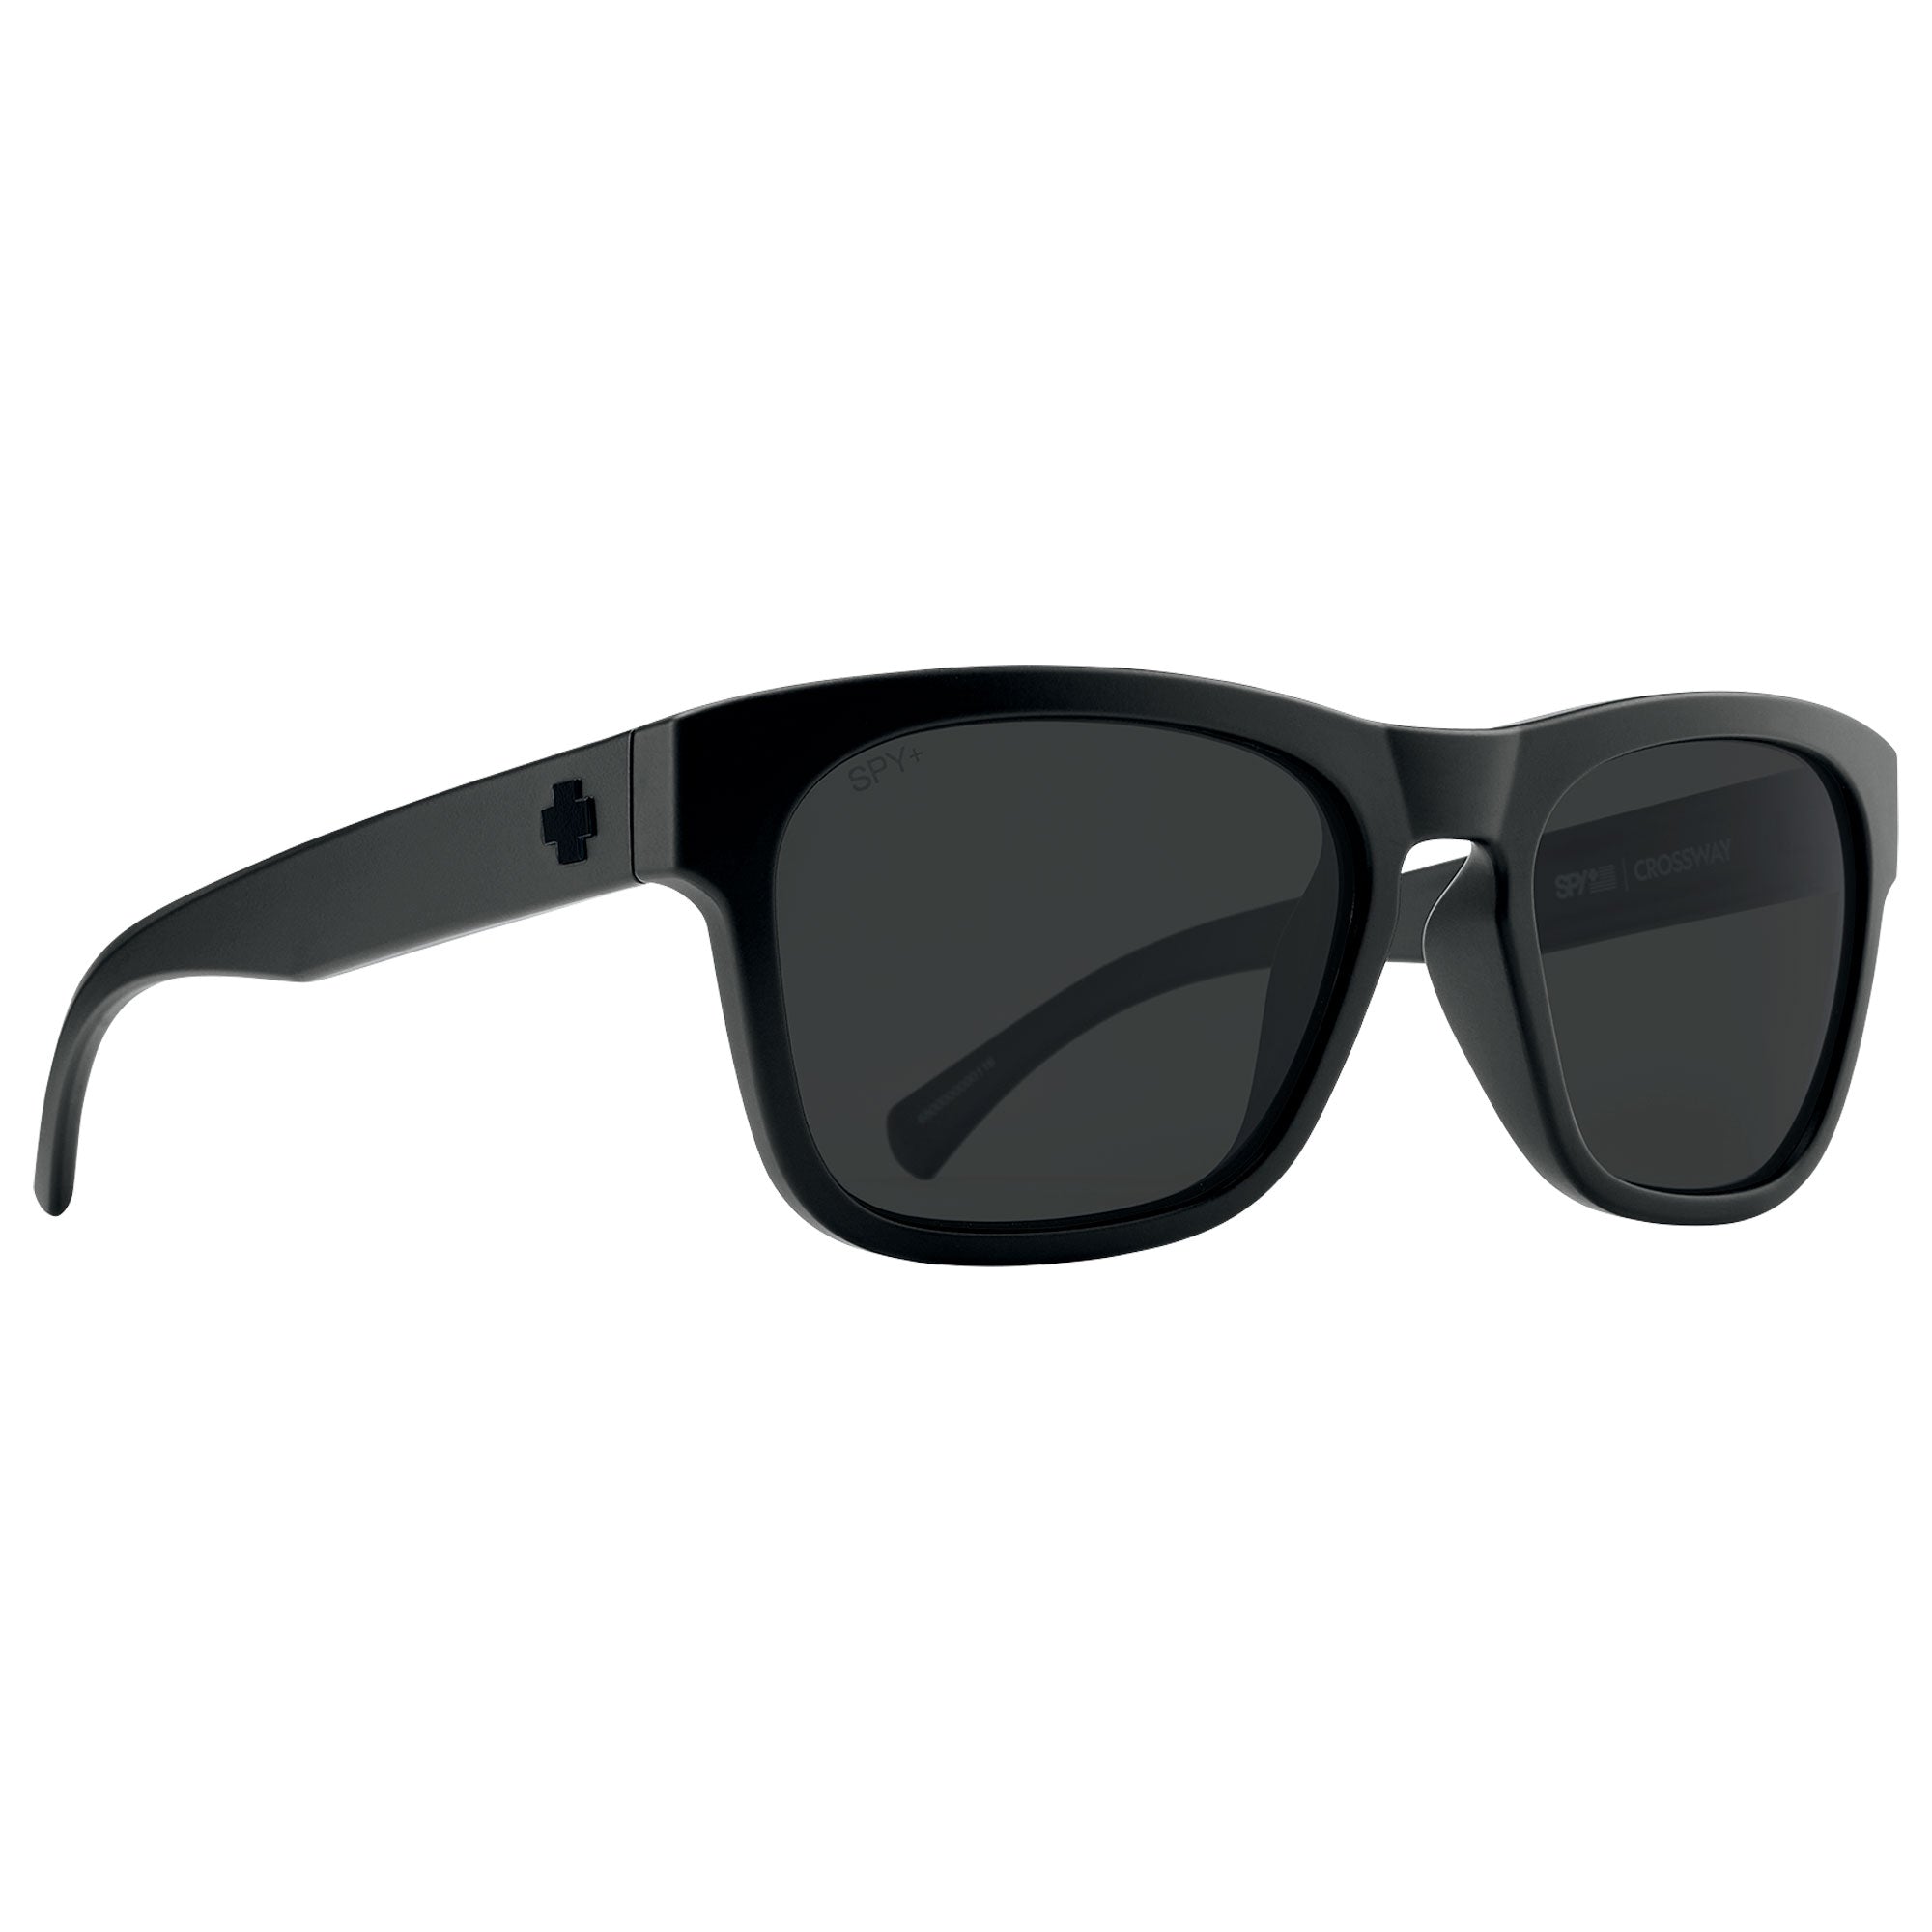 Spy Crossway Men's Polarized Sunglasses